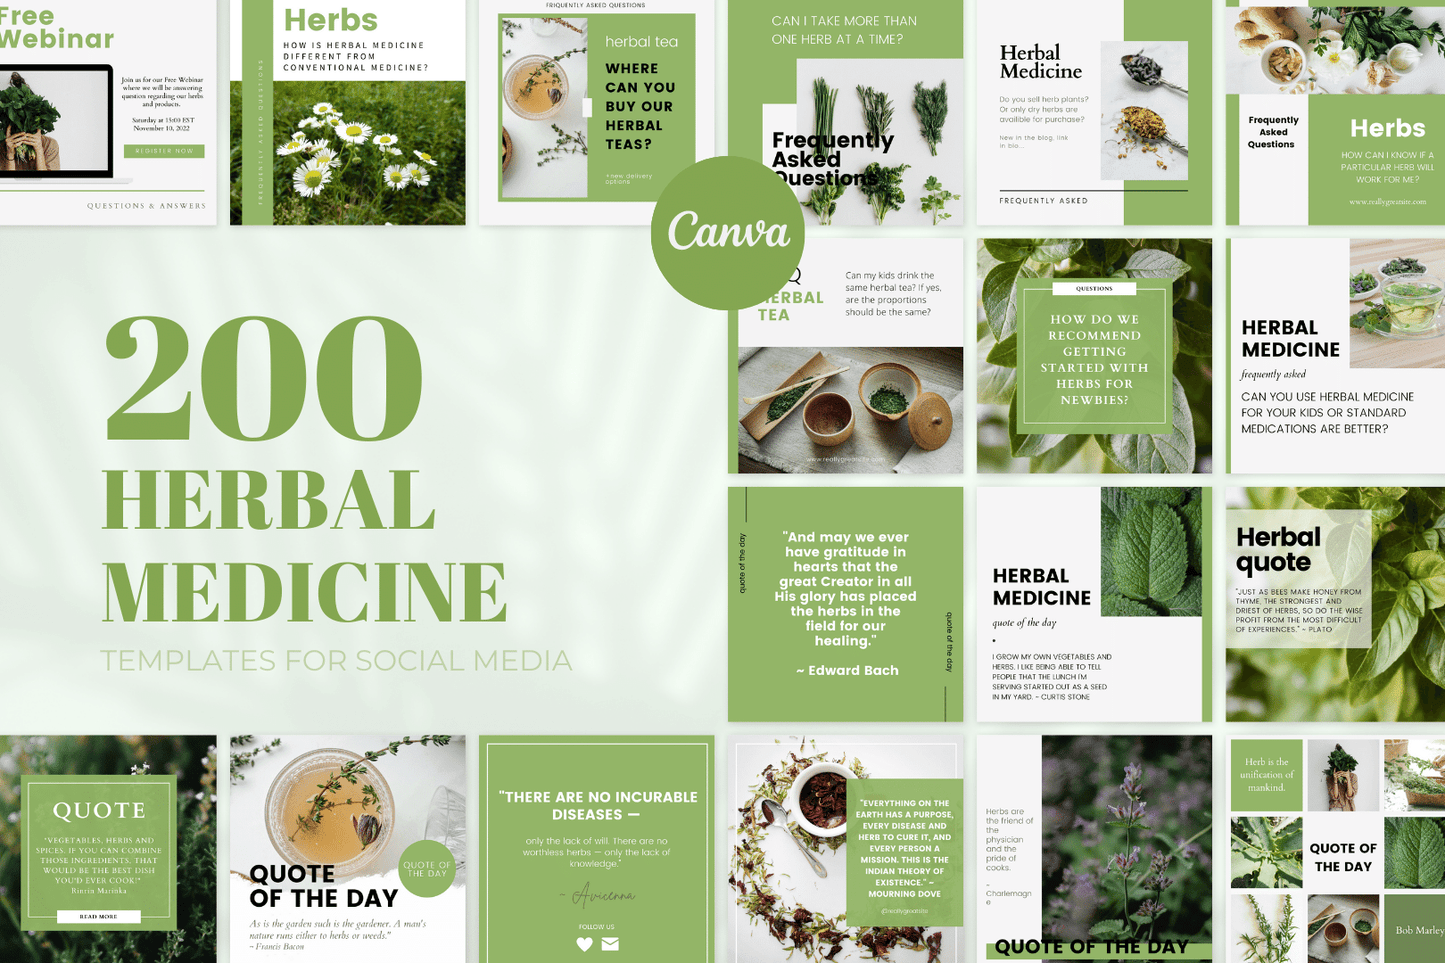 200 Herbal Medicine Templates for Social Media